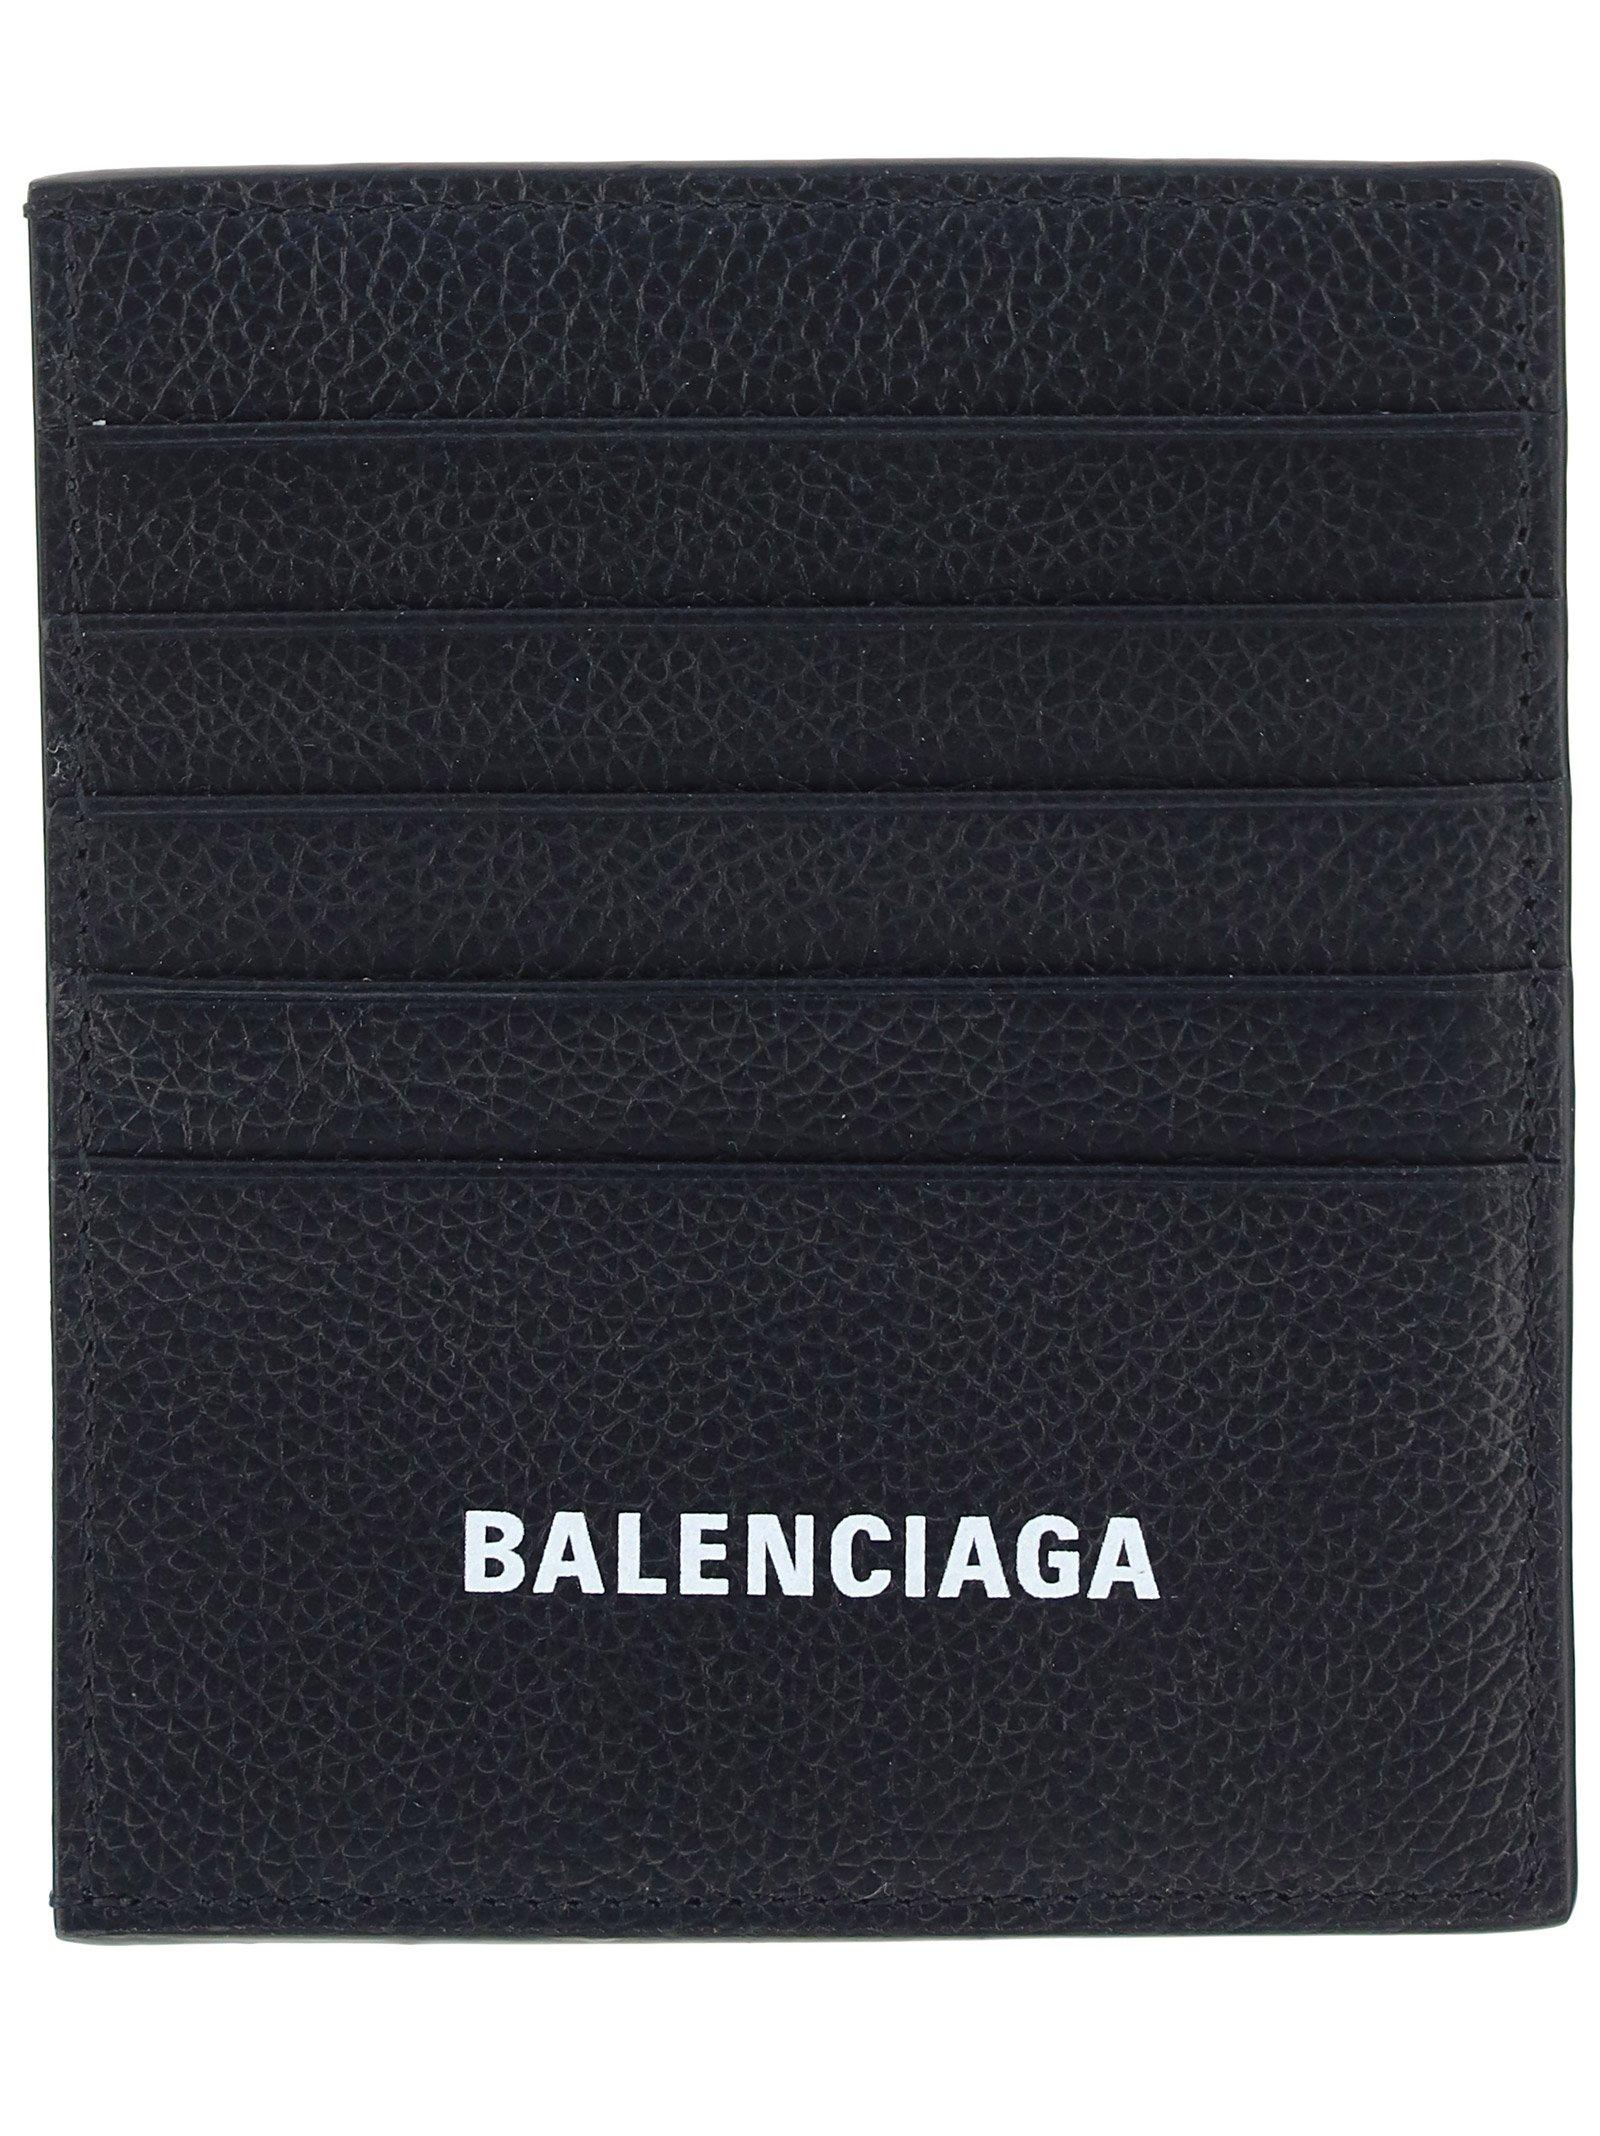 Balenciaga Leather Logo Card Holder in Black for Men - Lyst